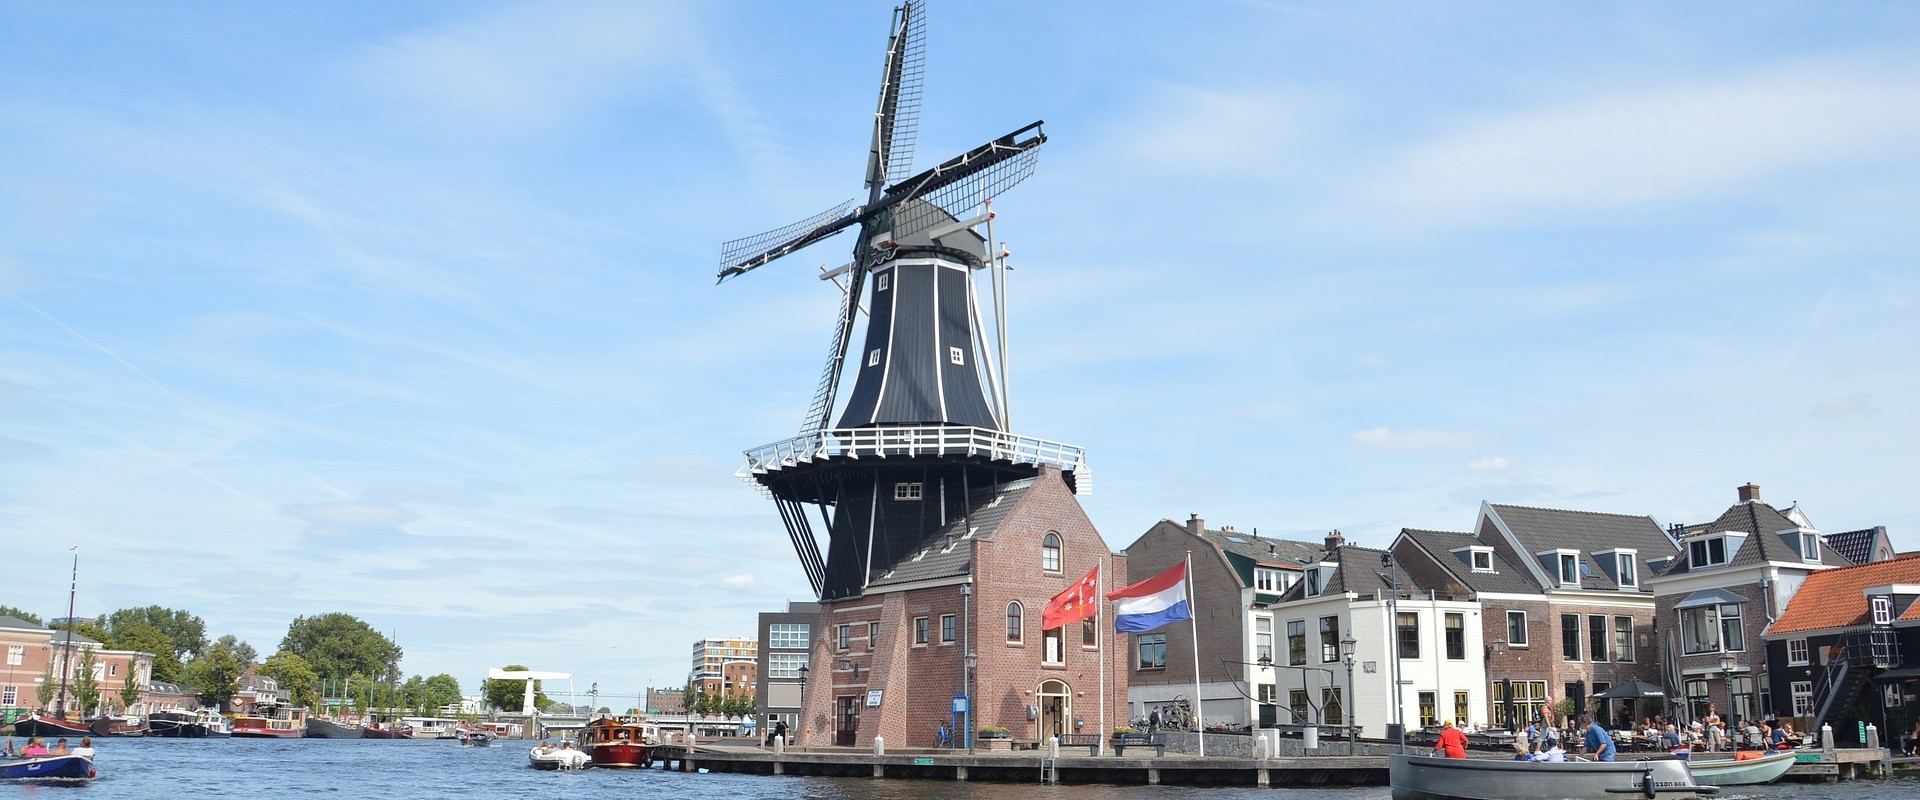 Woning kopen in Haarlem?